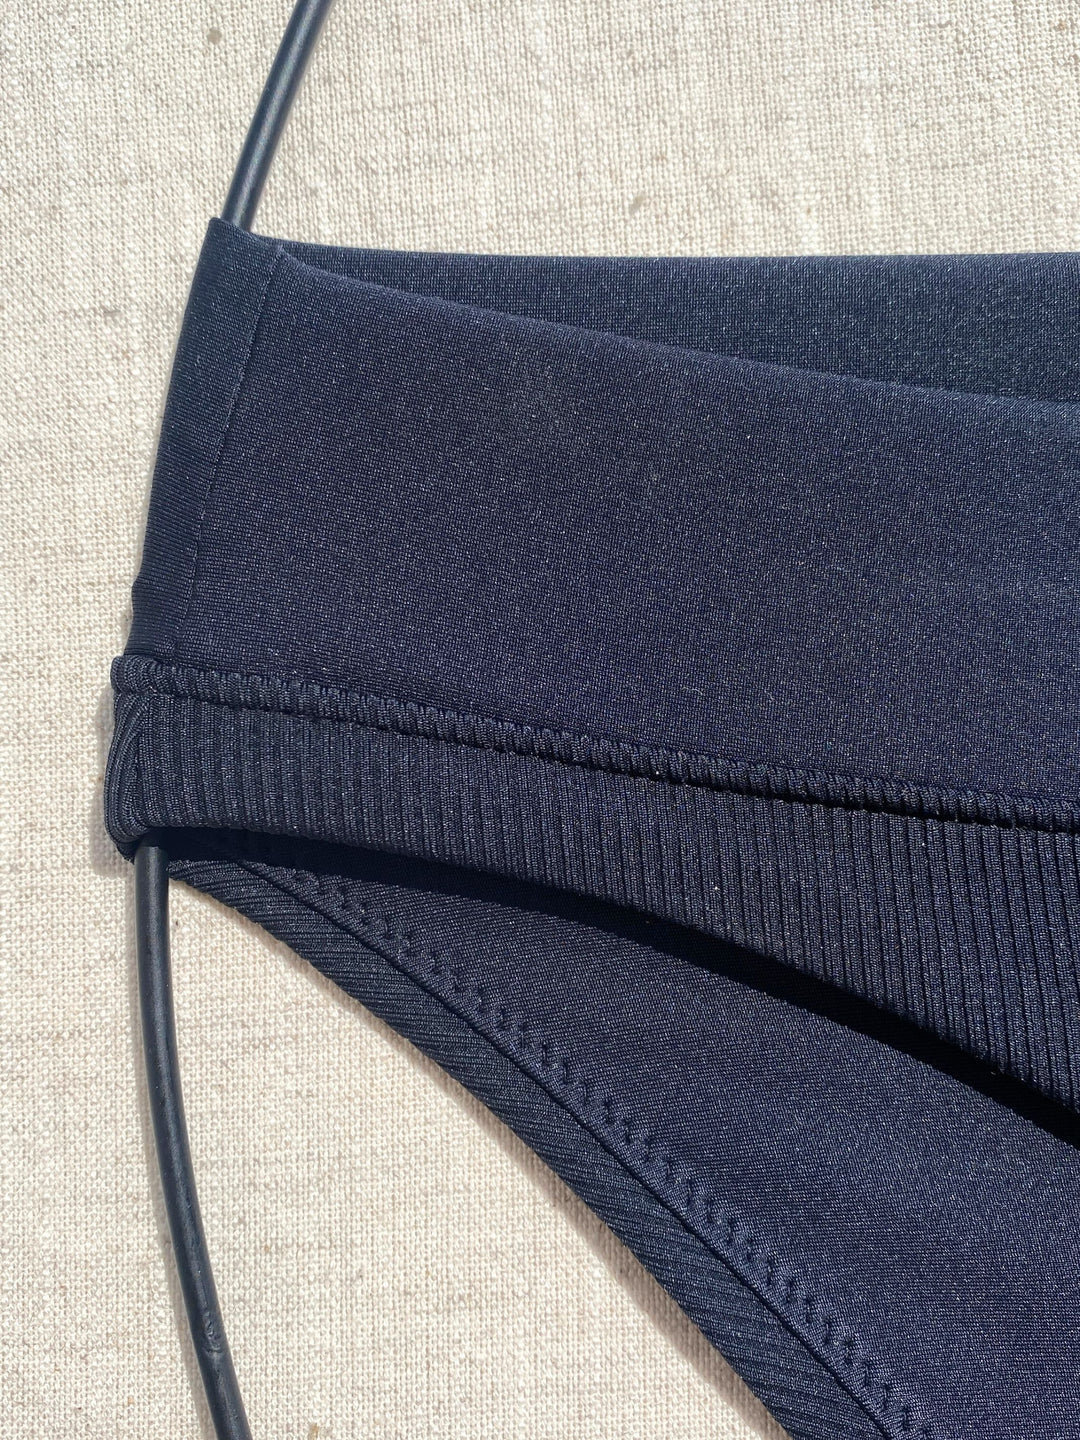 Bikini bottom classic in black with rib fabric and embroidery, soft waistband